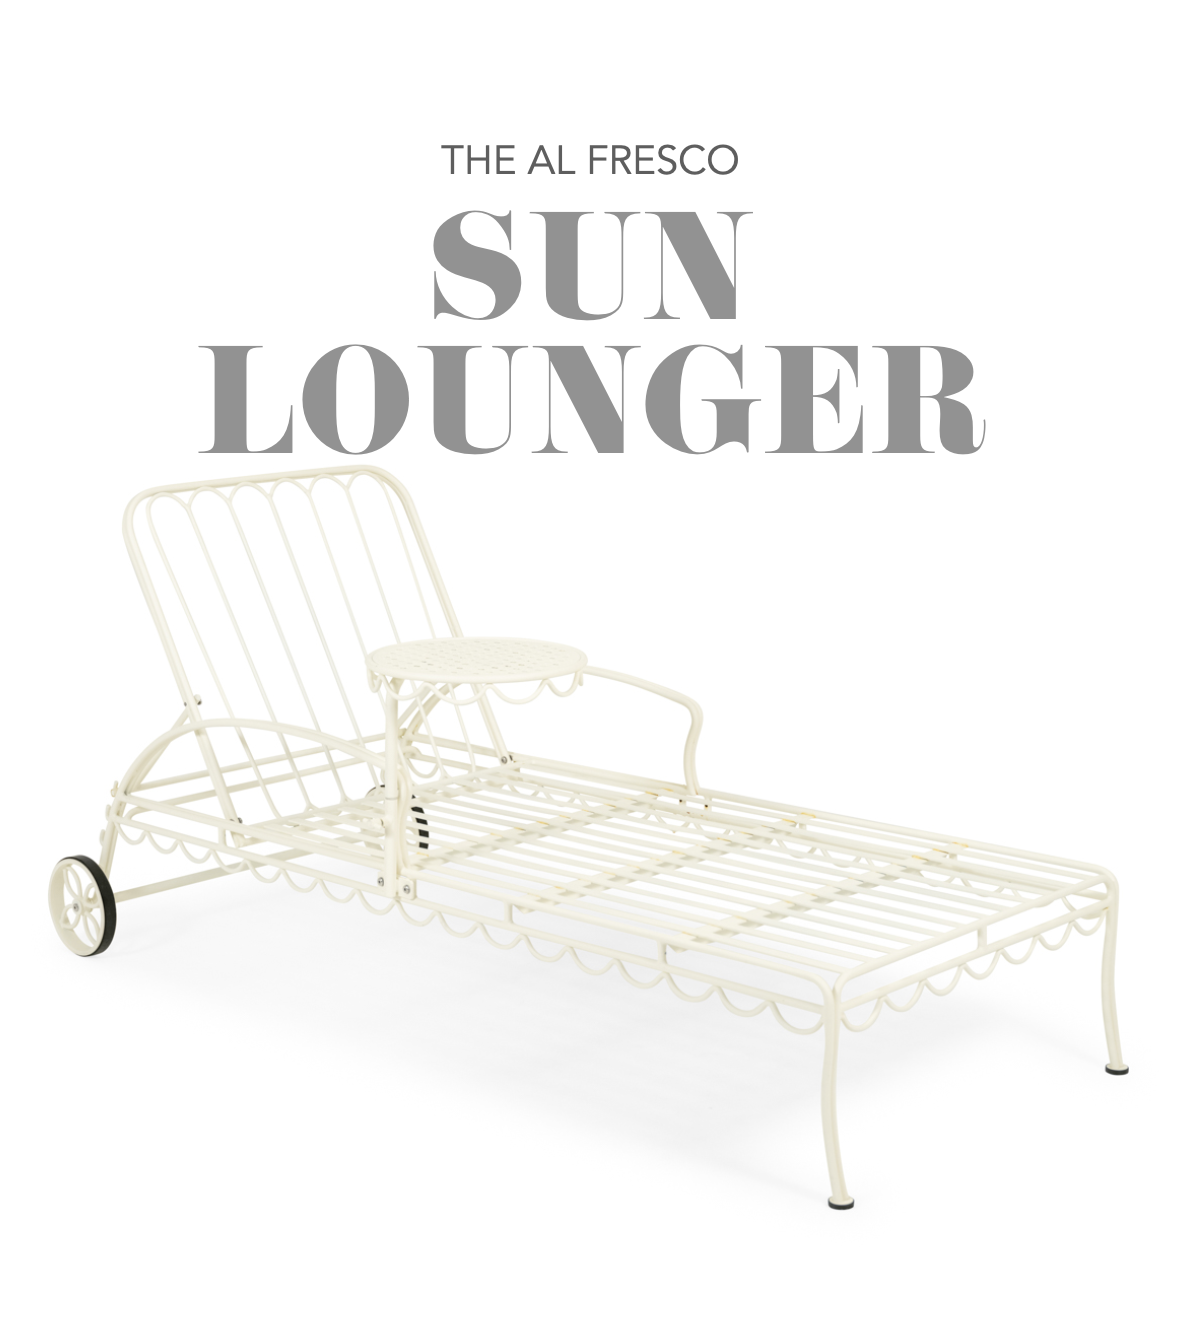 Video of the al fresco sun lounger